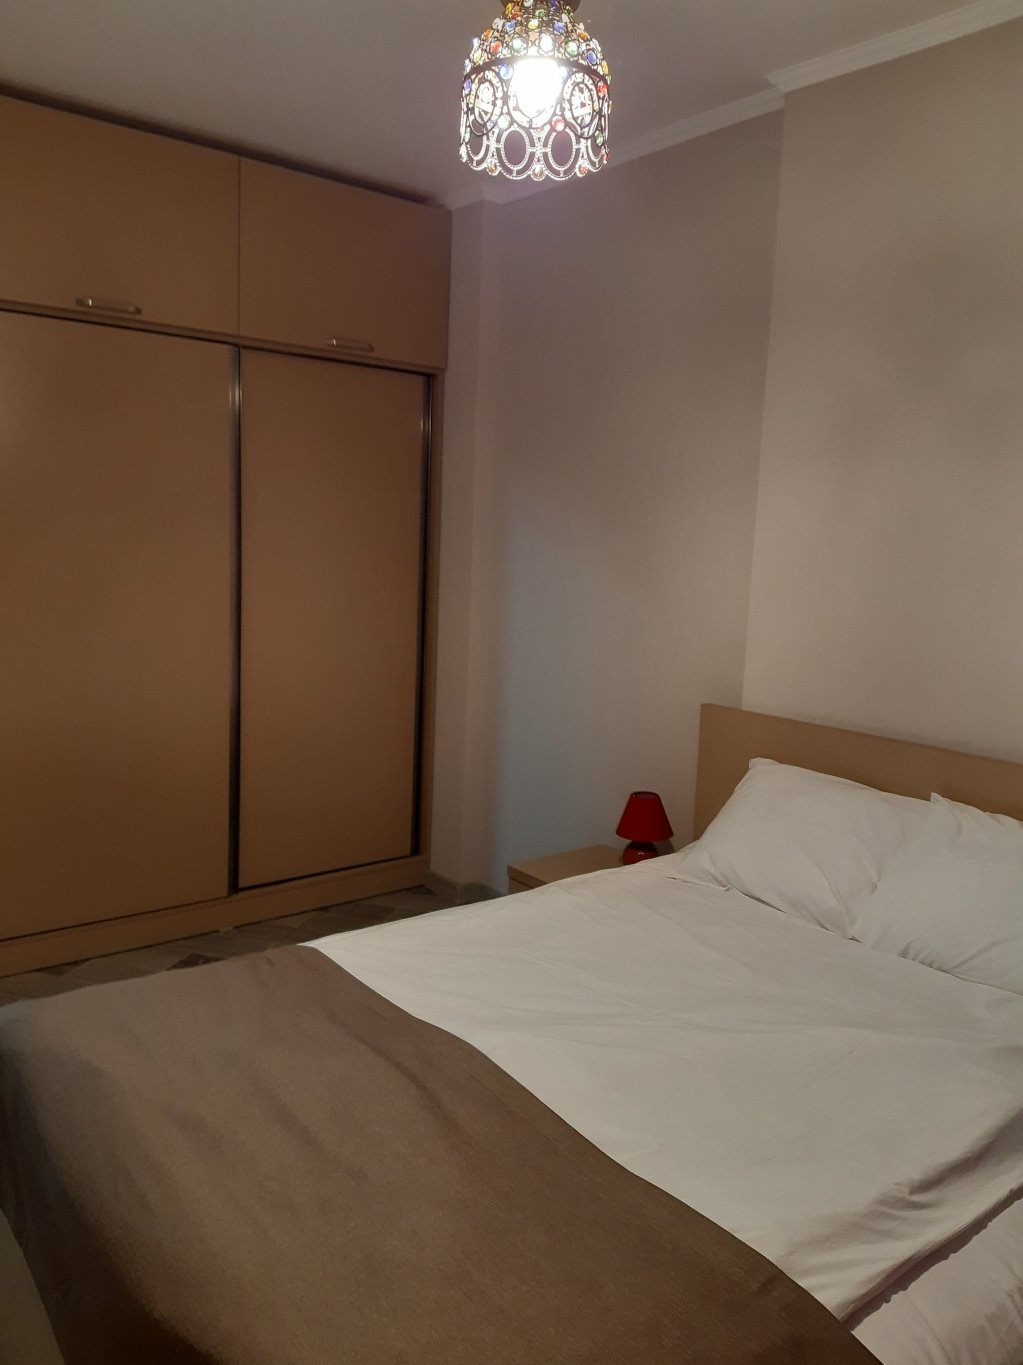 1-bedroom apartment "Spark" id-995 -  rent an apartment in Batumi